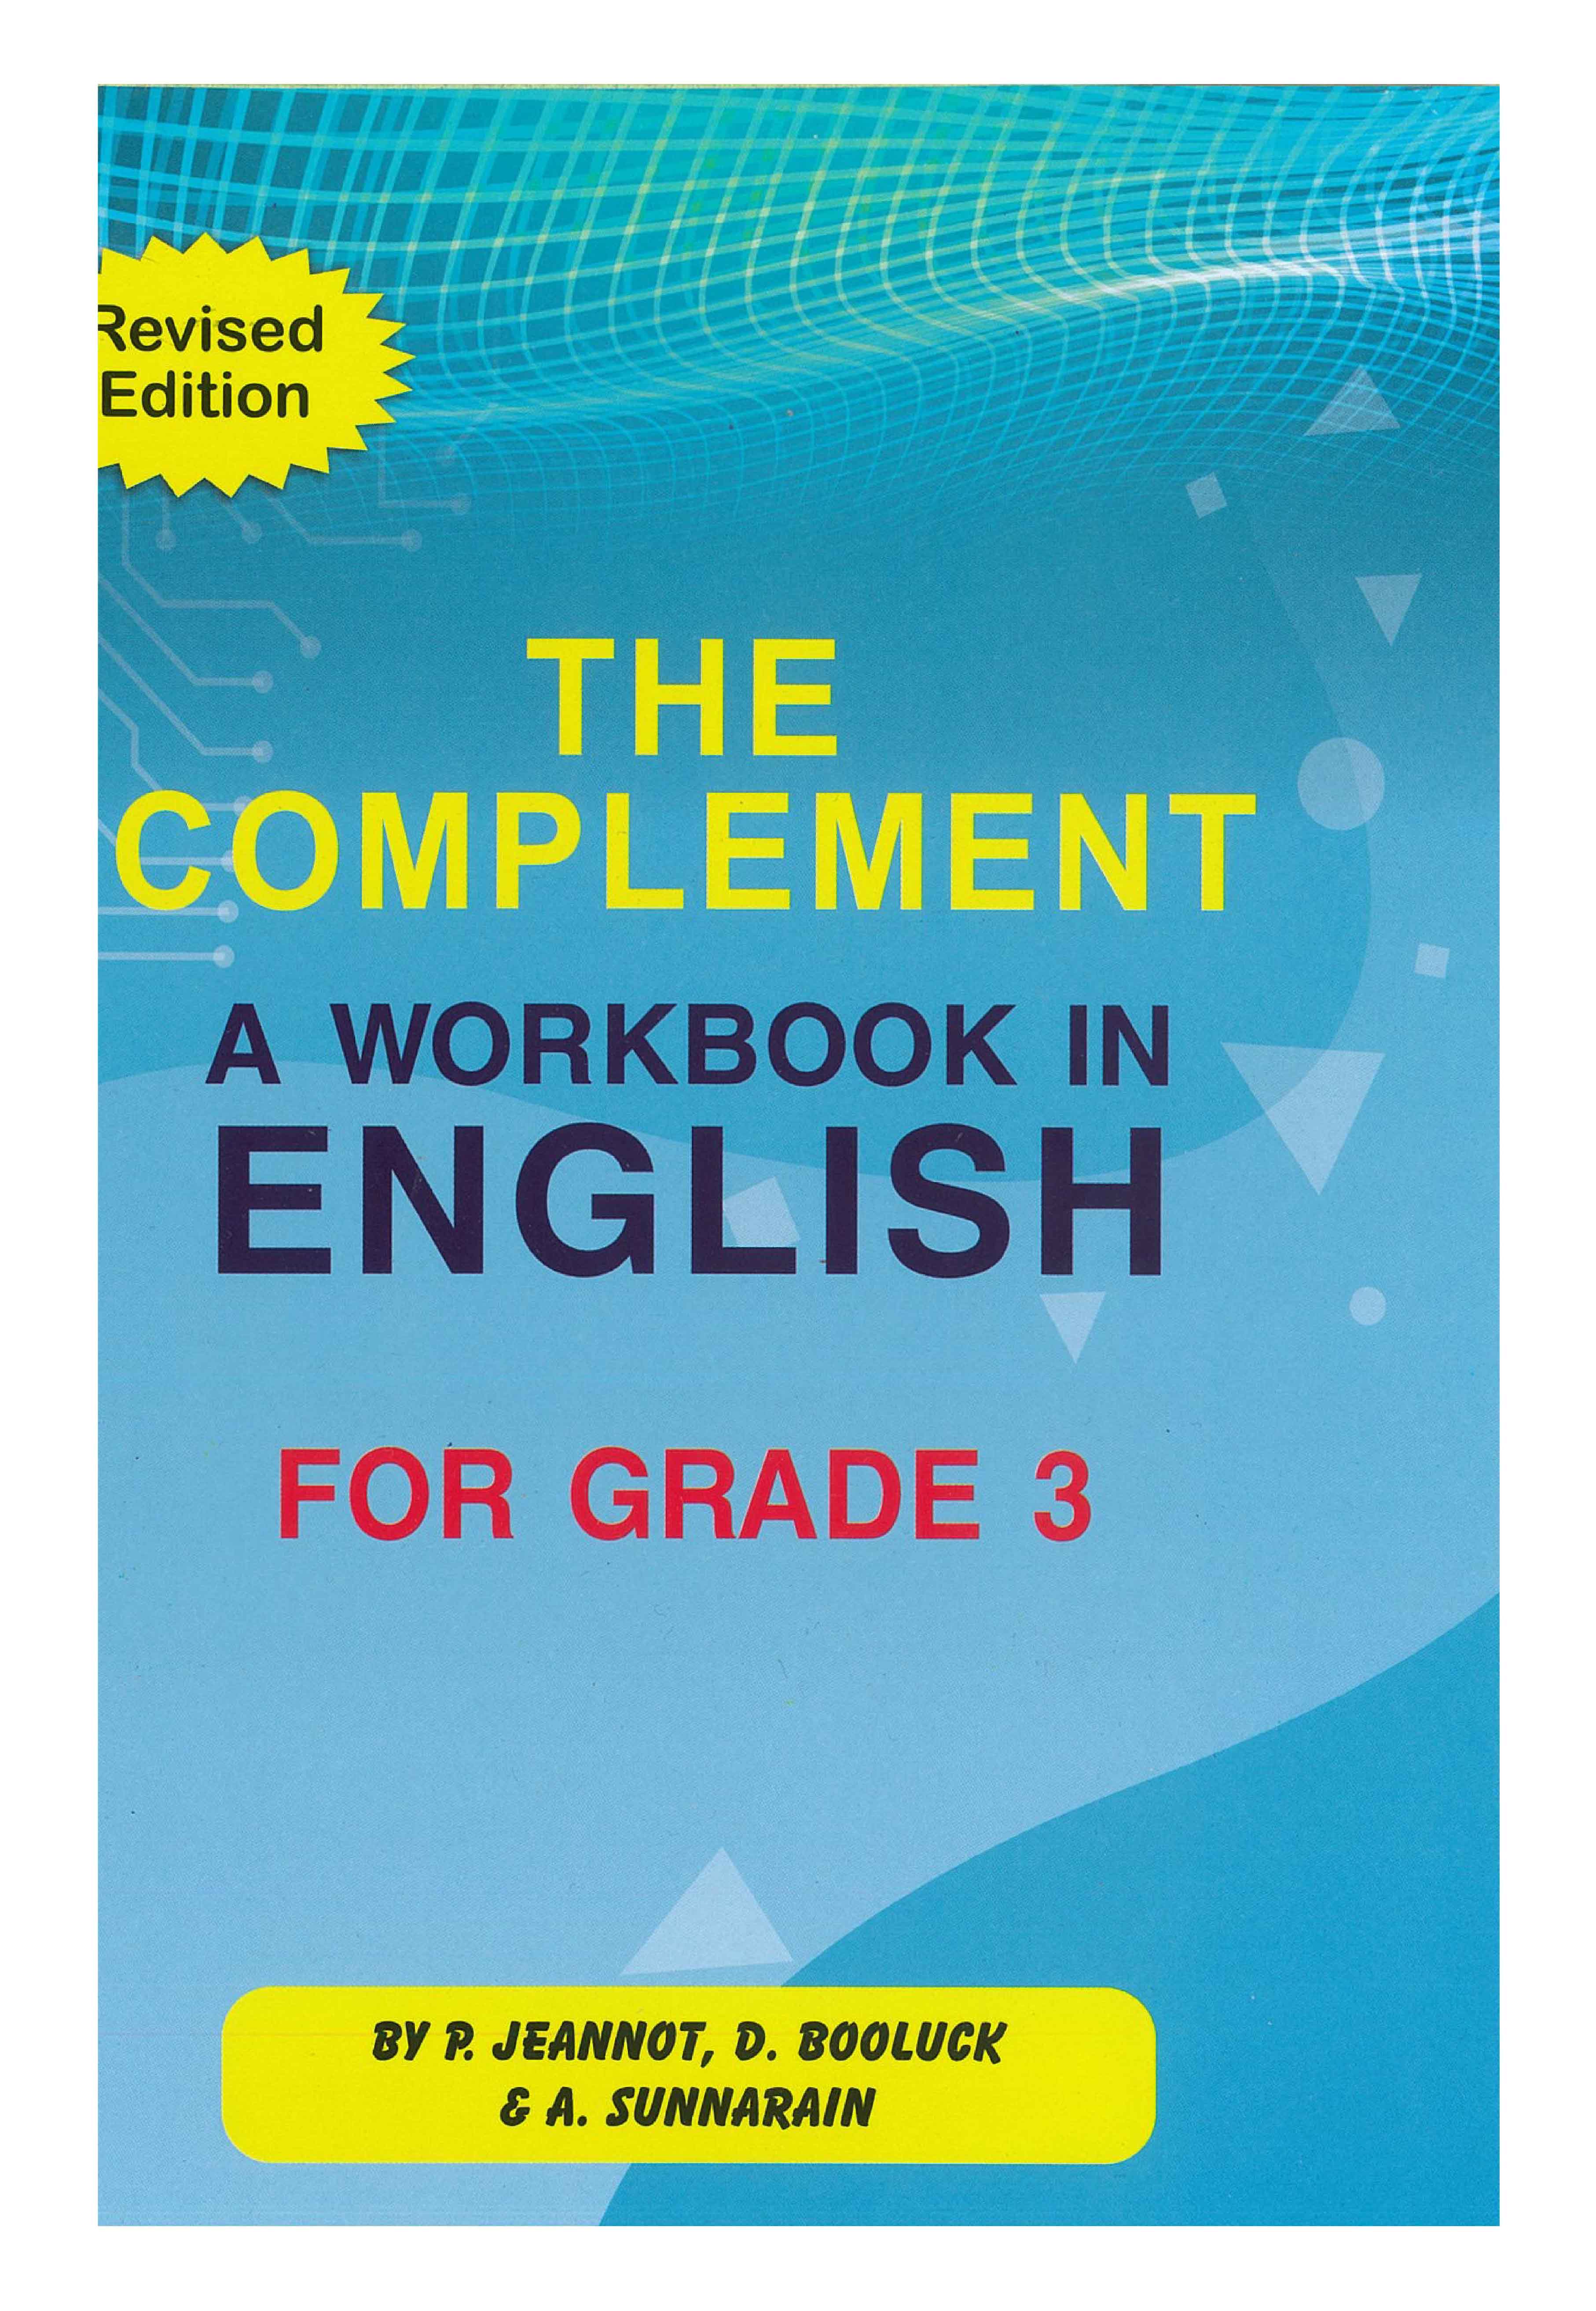 THE COMPLEMENT ENGLISH WORKBOOK GRADE 3 (SUNNARAIN)